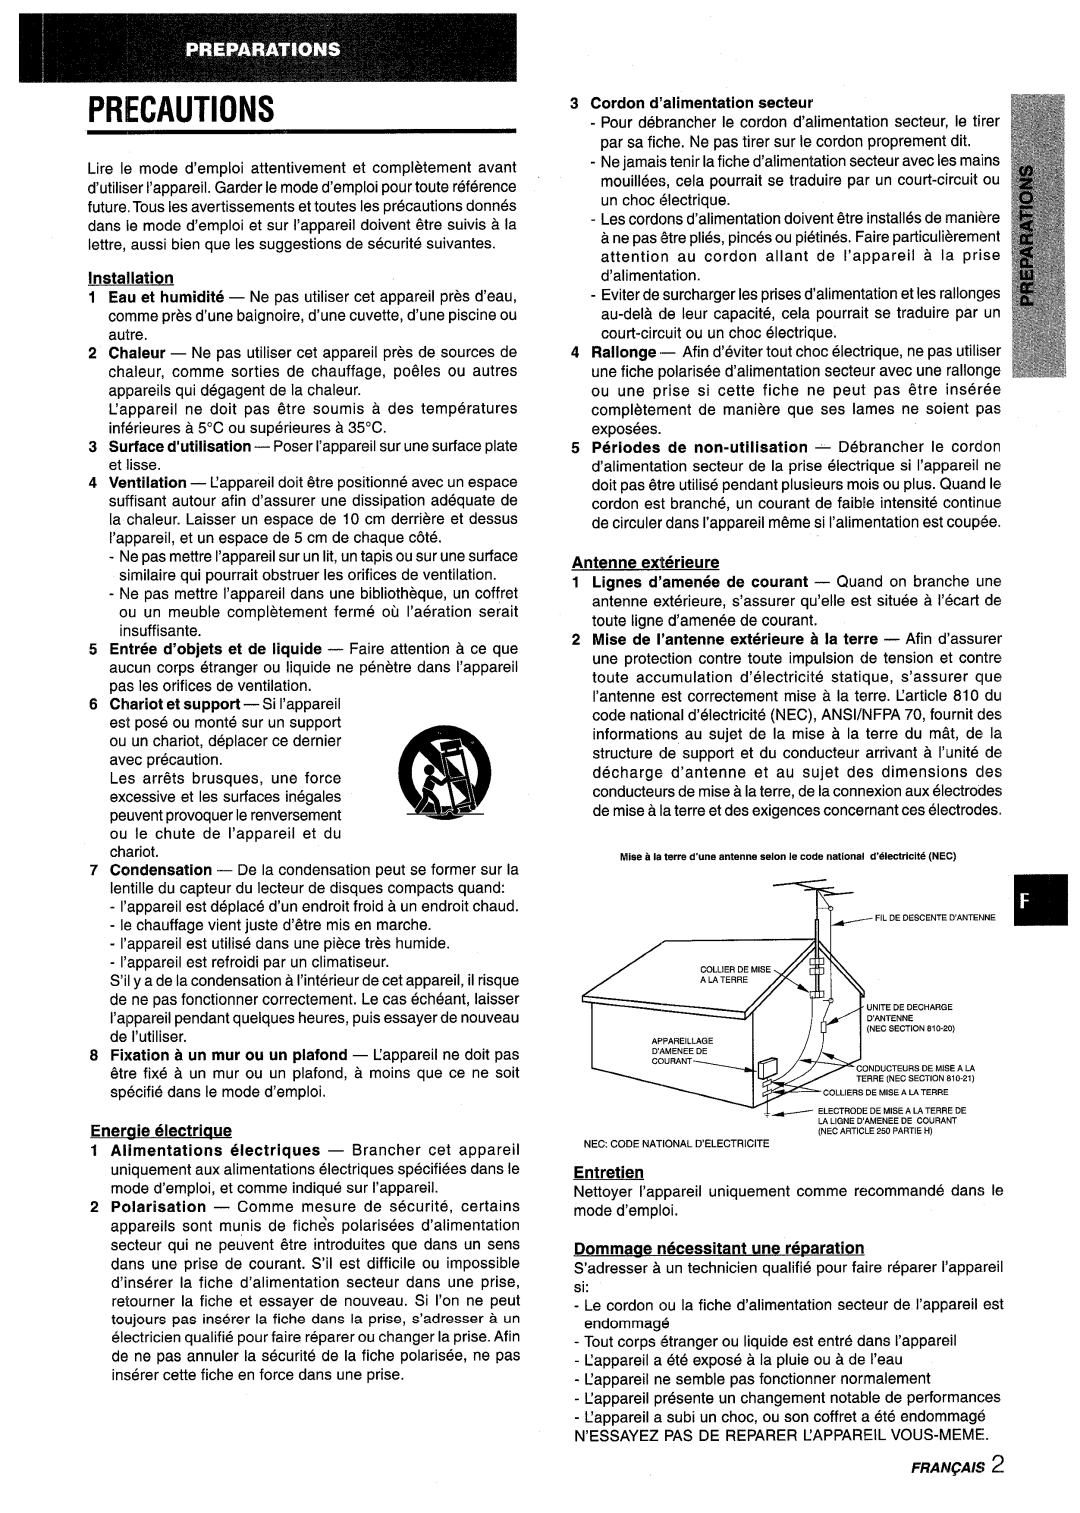 Aiwa NSX-V9000 manual Dommaae necessitant une reparation, Installation, Eneraie electriaue, Cordon d’alimentation secteur 